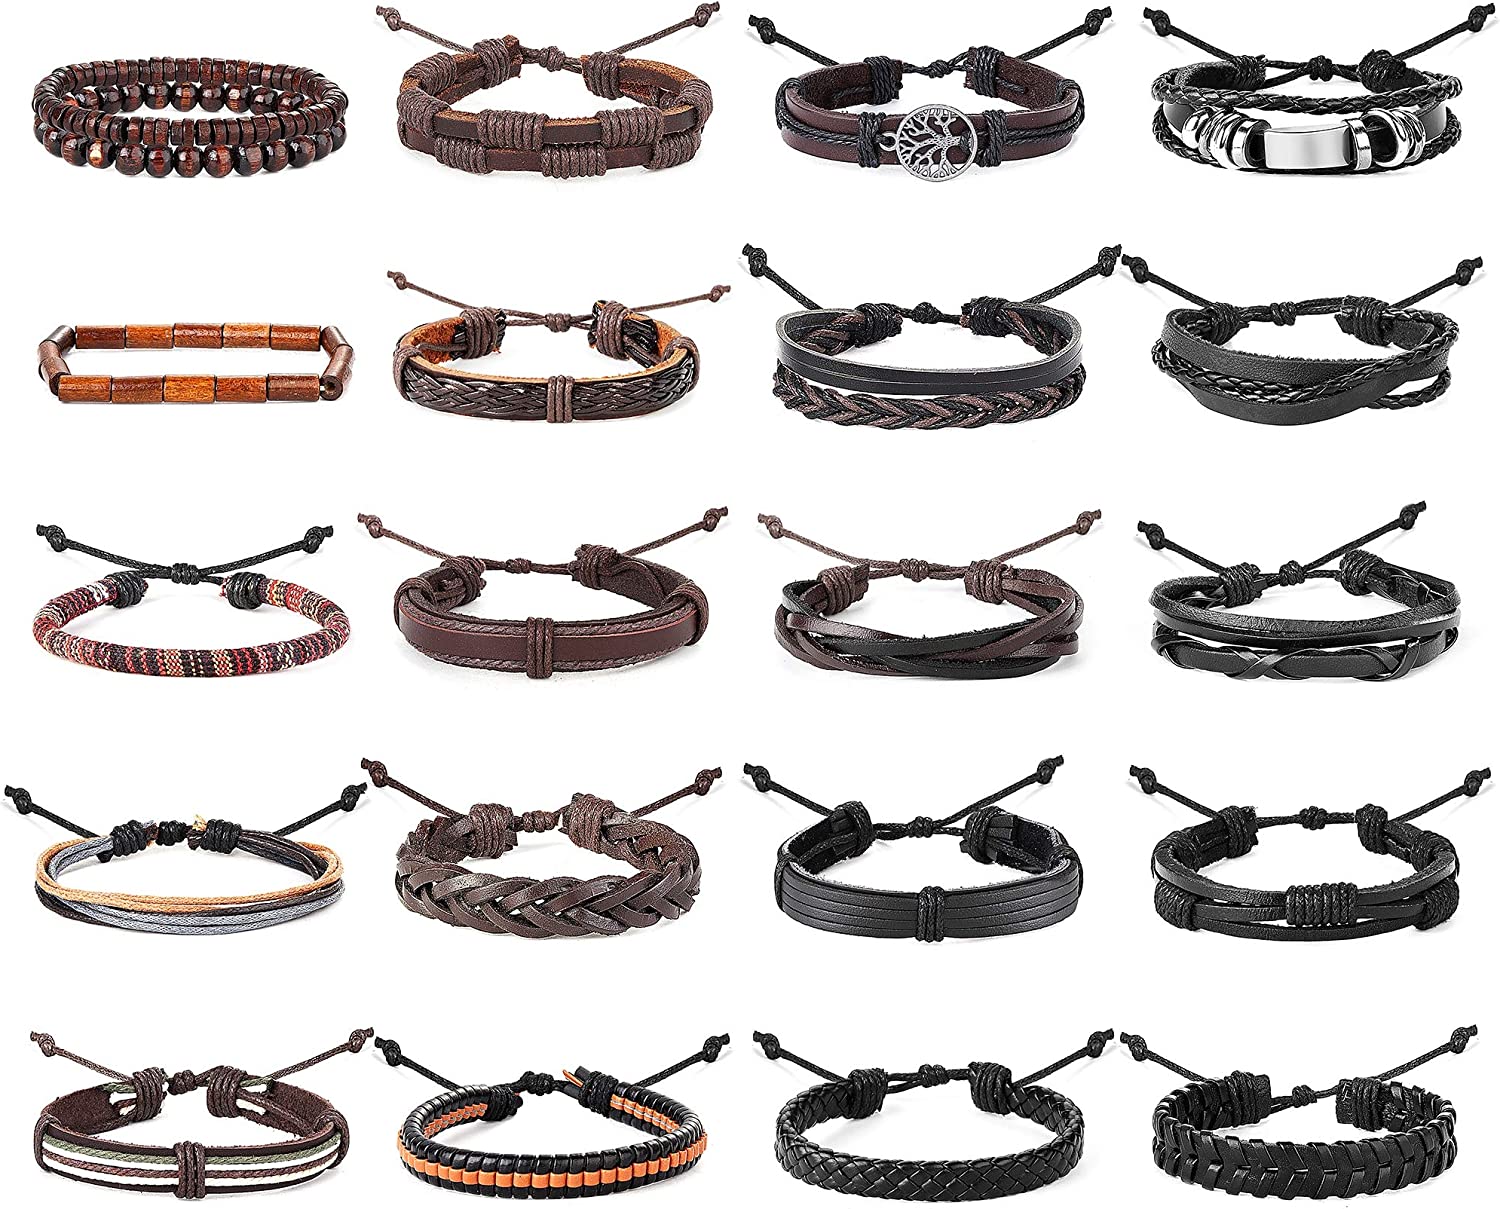 FINREZIO 15-24 Pcs Braided Bracelet Set Women Men Beads Leather Wristbands Boho Ethnic Tribal Linen Hemp Cords Wrap Bracelets String Handmade Jewelry